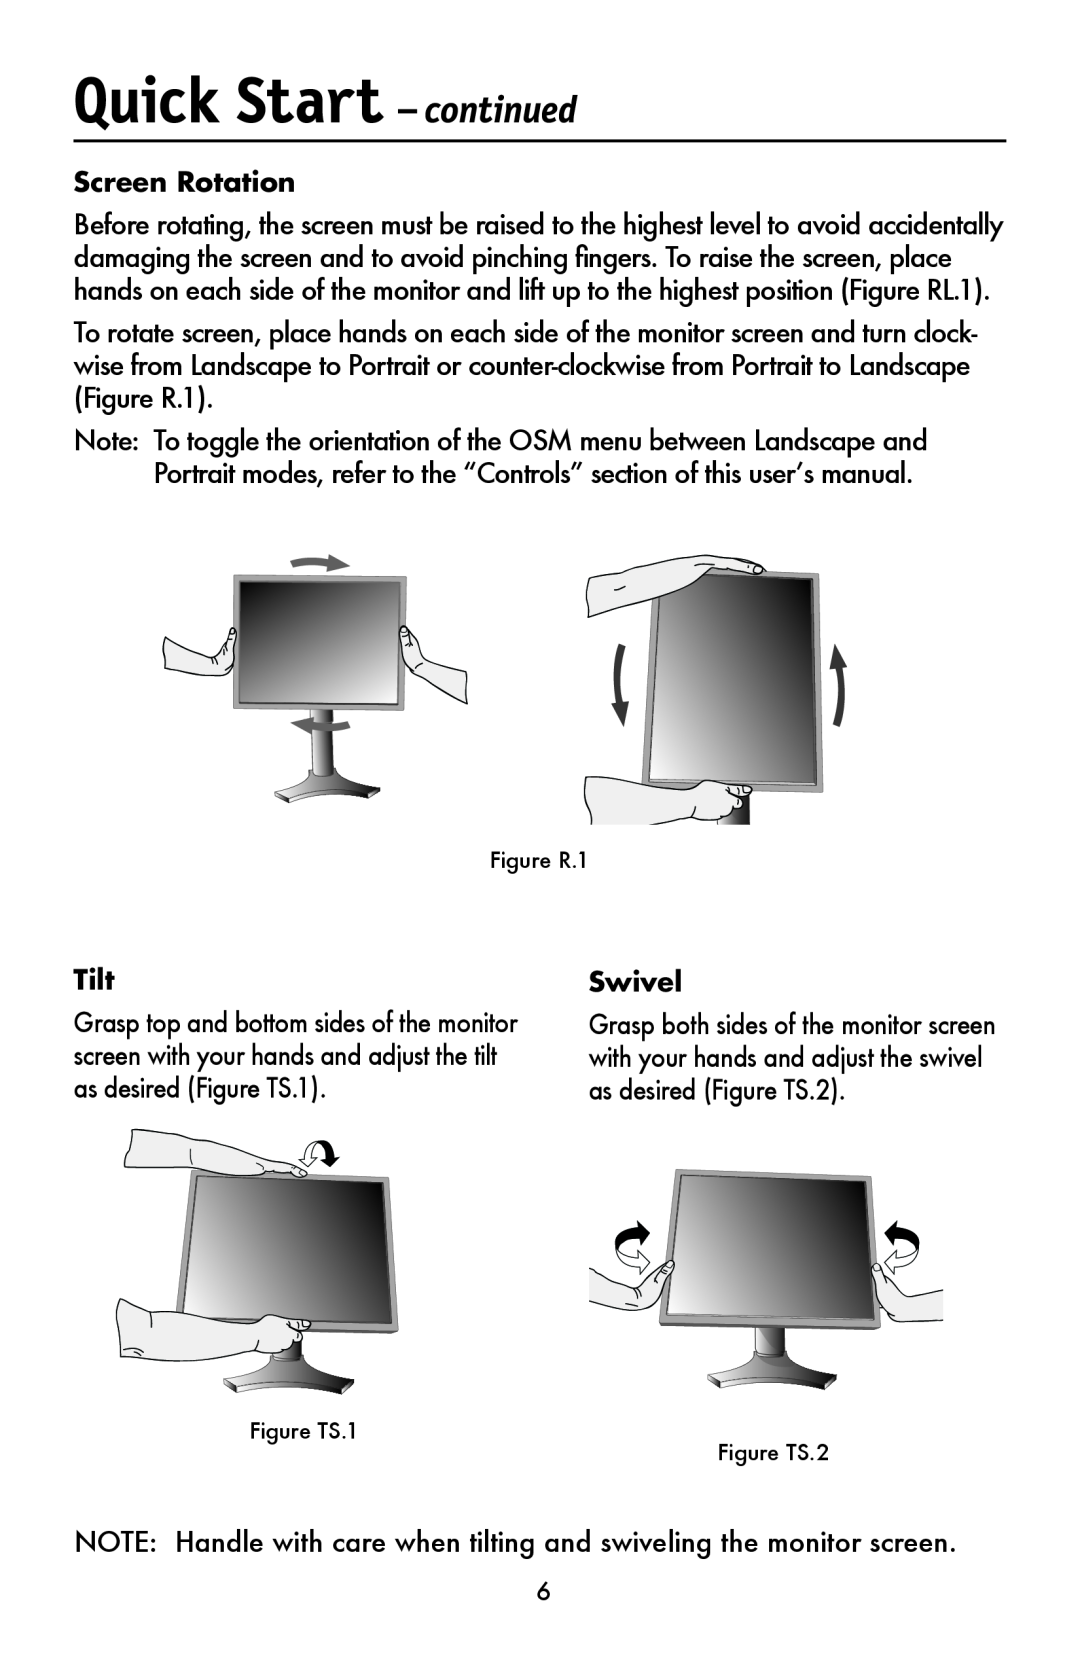 NEC LCD1990FXTM user manual Screen Rotation, Tilt, Swivel, Quick Start - continued 